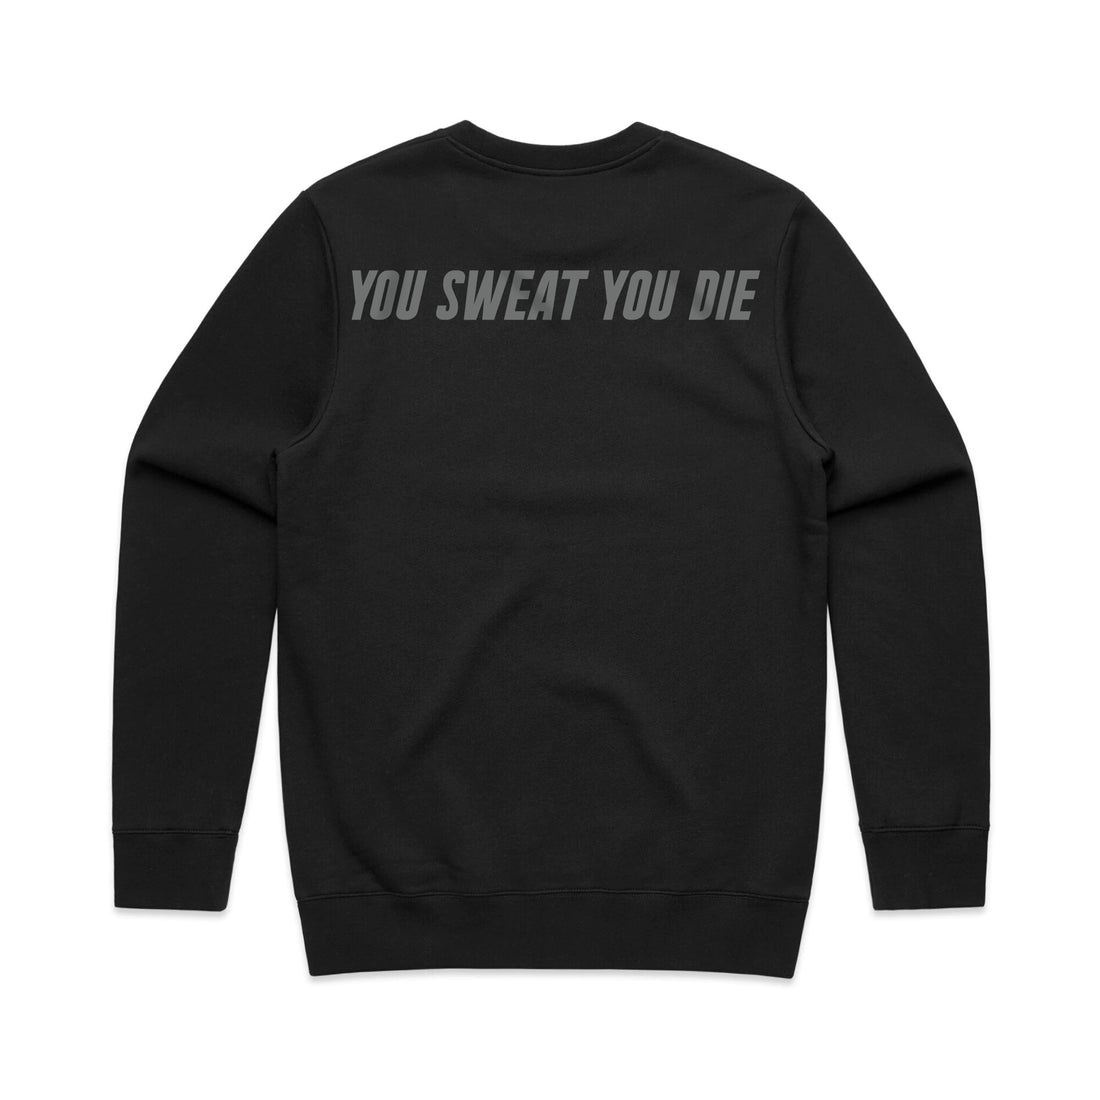 Survivorman - You Sweat You Die - Crew Sweatshirt - Black